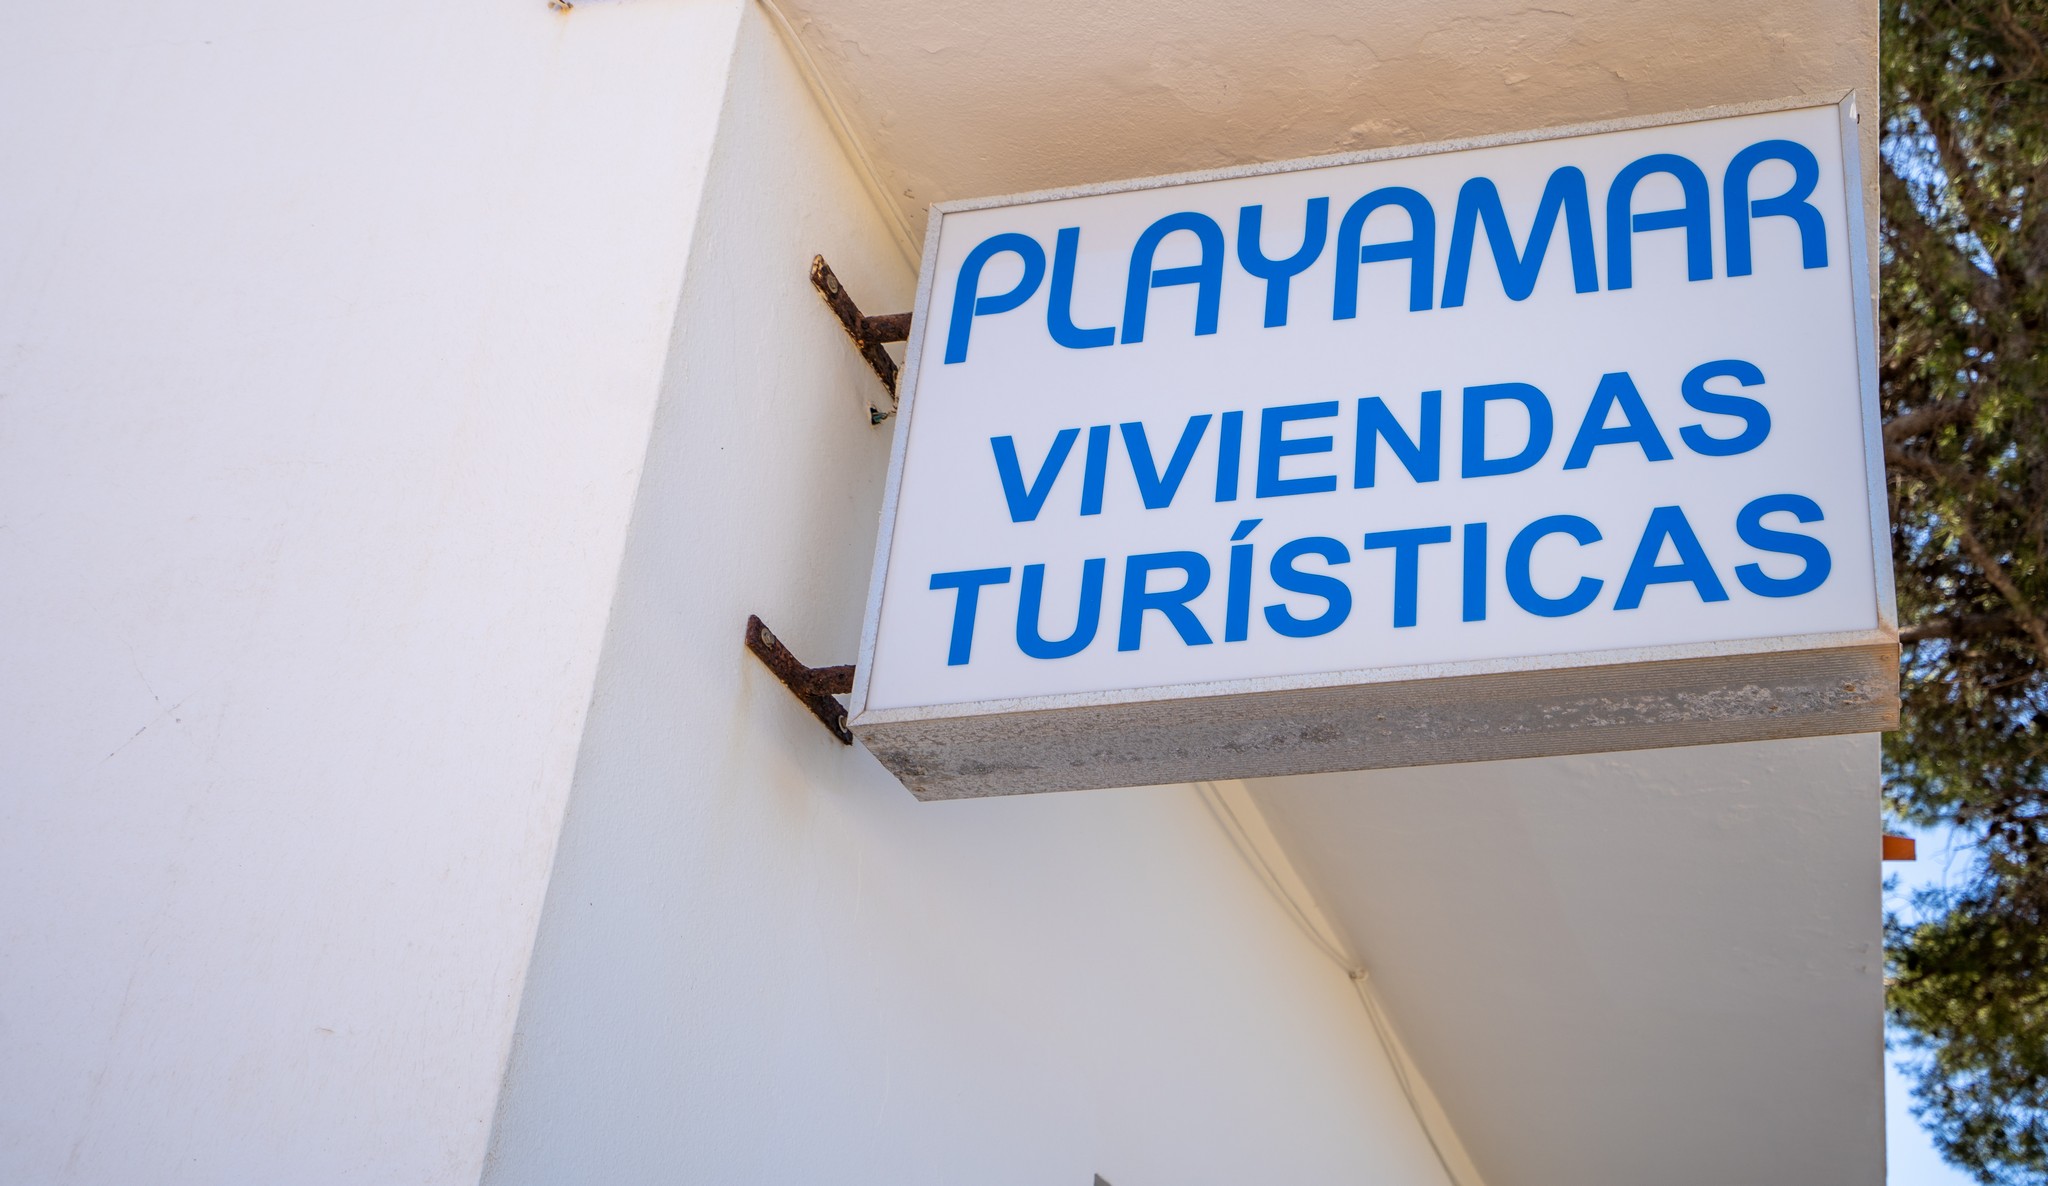 Viviendas Turisticas Playamar - Formentera Break